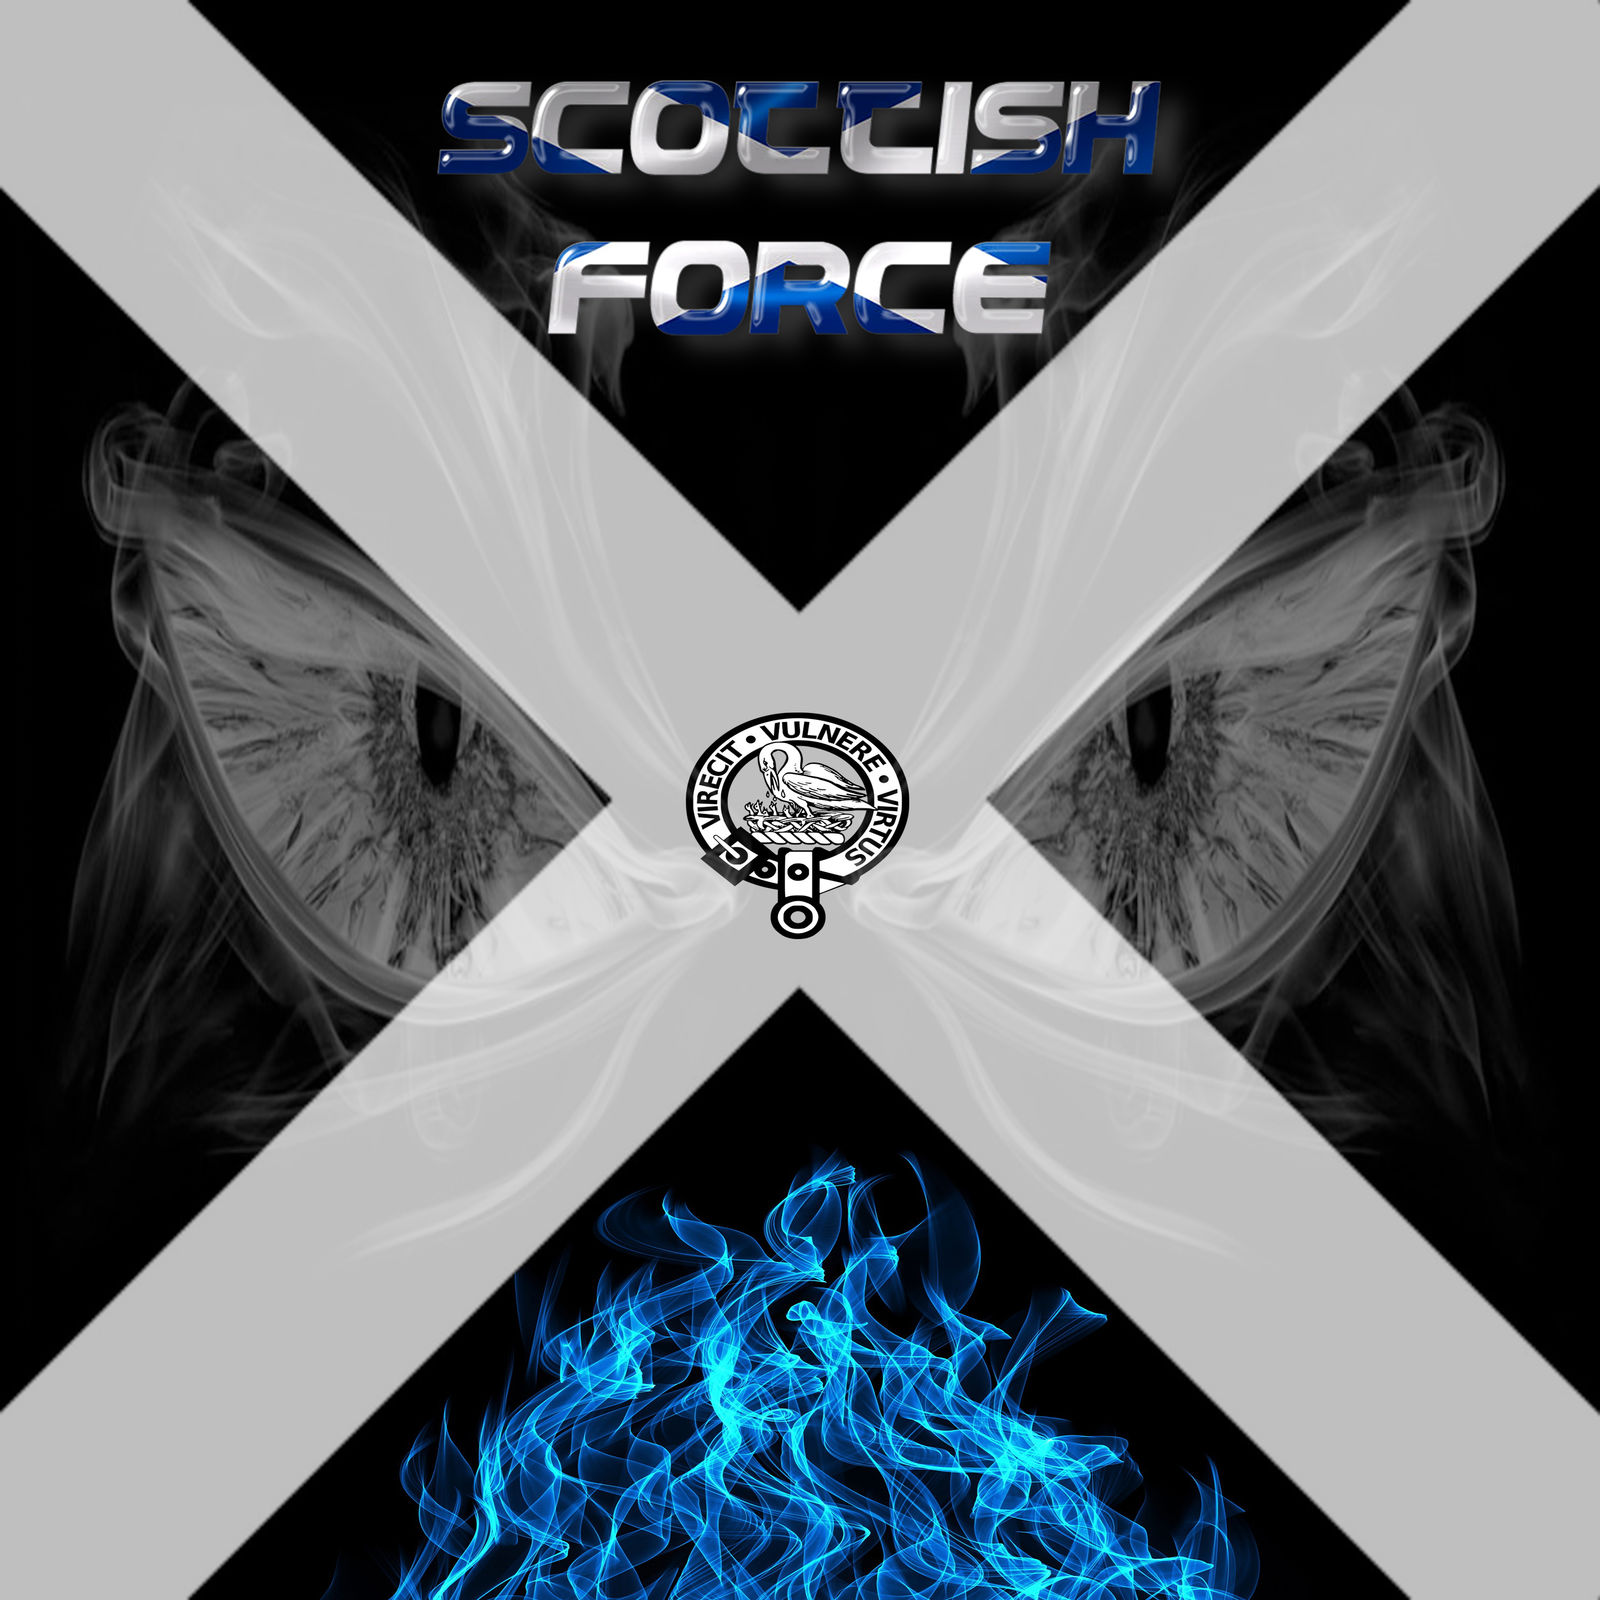 Scottish Force